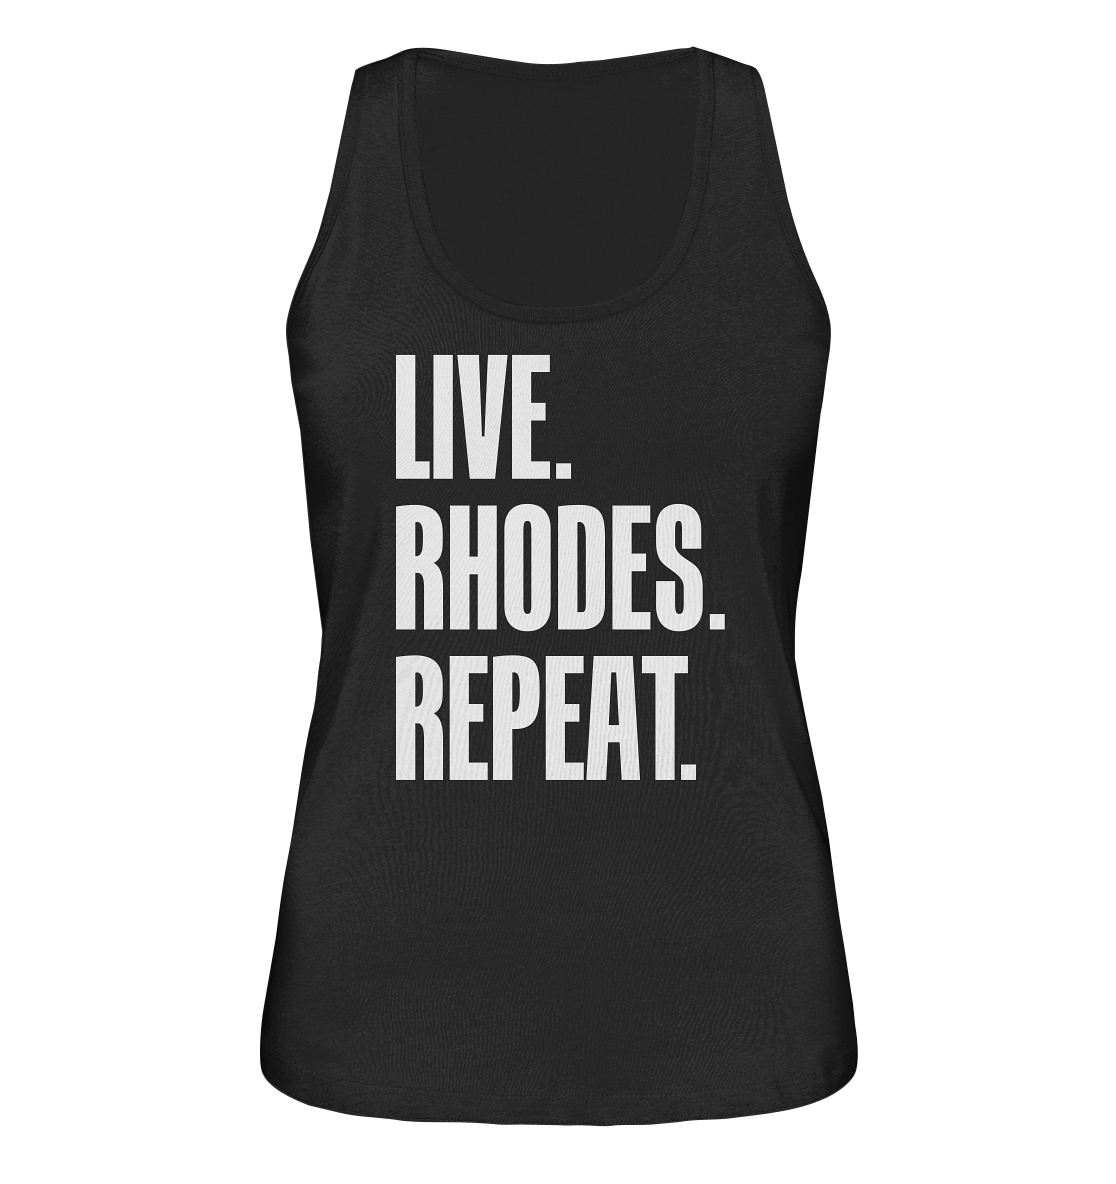 LIVE. RHODES. REPEAT. - Ladies organic tank top